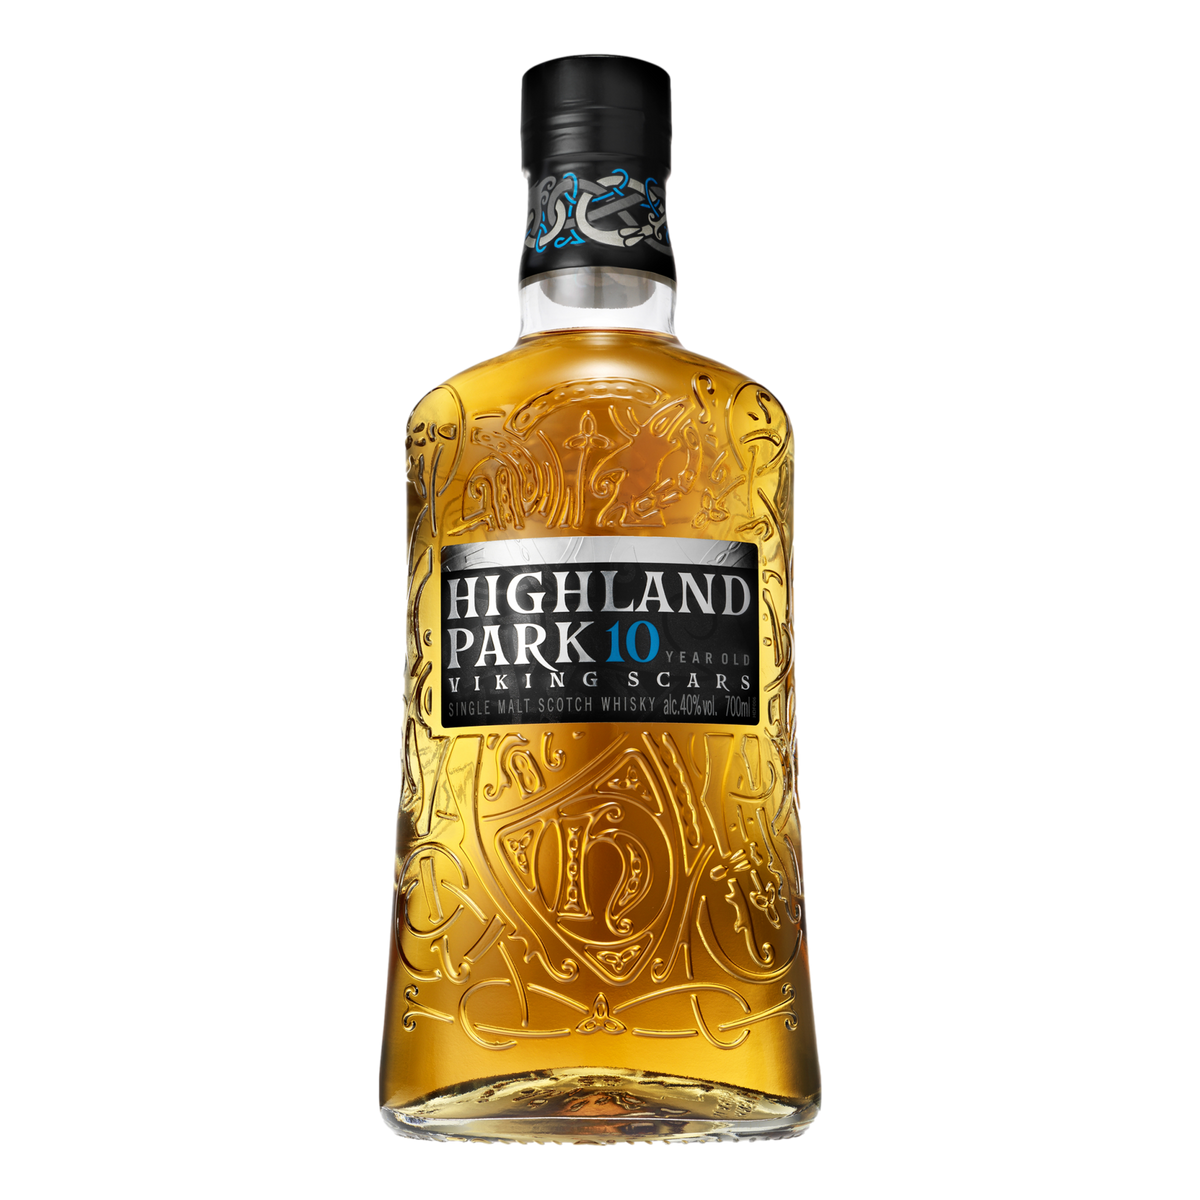 Highland Park Single Malt Scotch Whisky Viking Scars 10YO 700ml